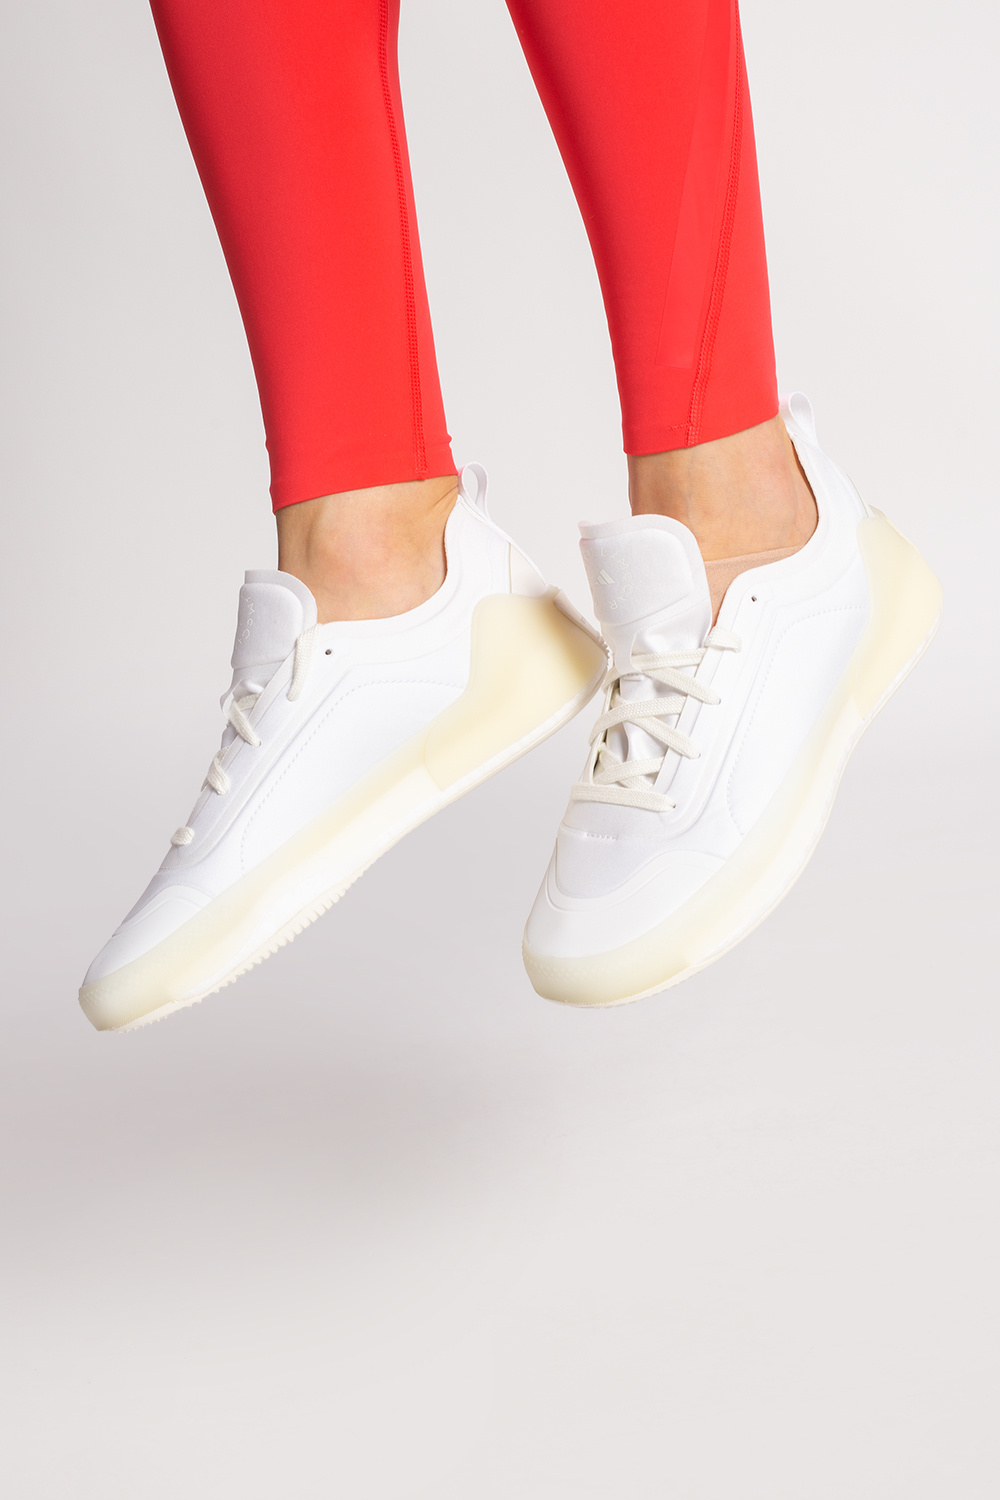 adidas by Stella McCartney Women's ASMC Treino Sneakers,  Ftwwht/Ftwwht/Ftwwht, White, Off White, 5 Medium US